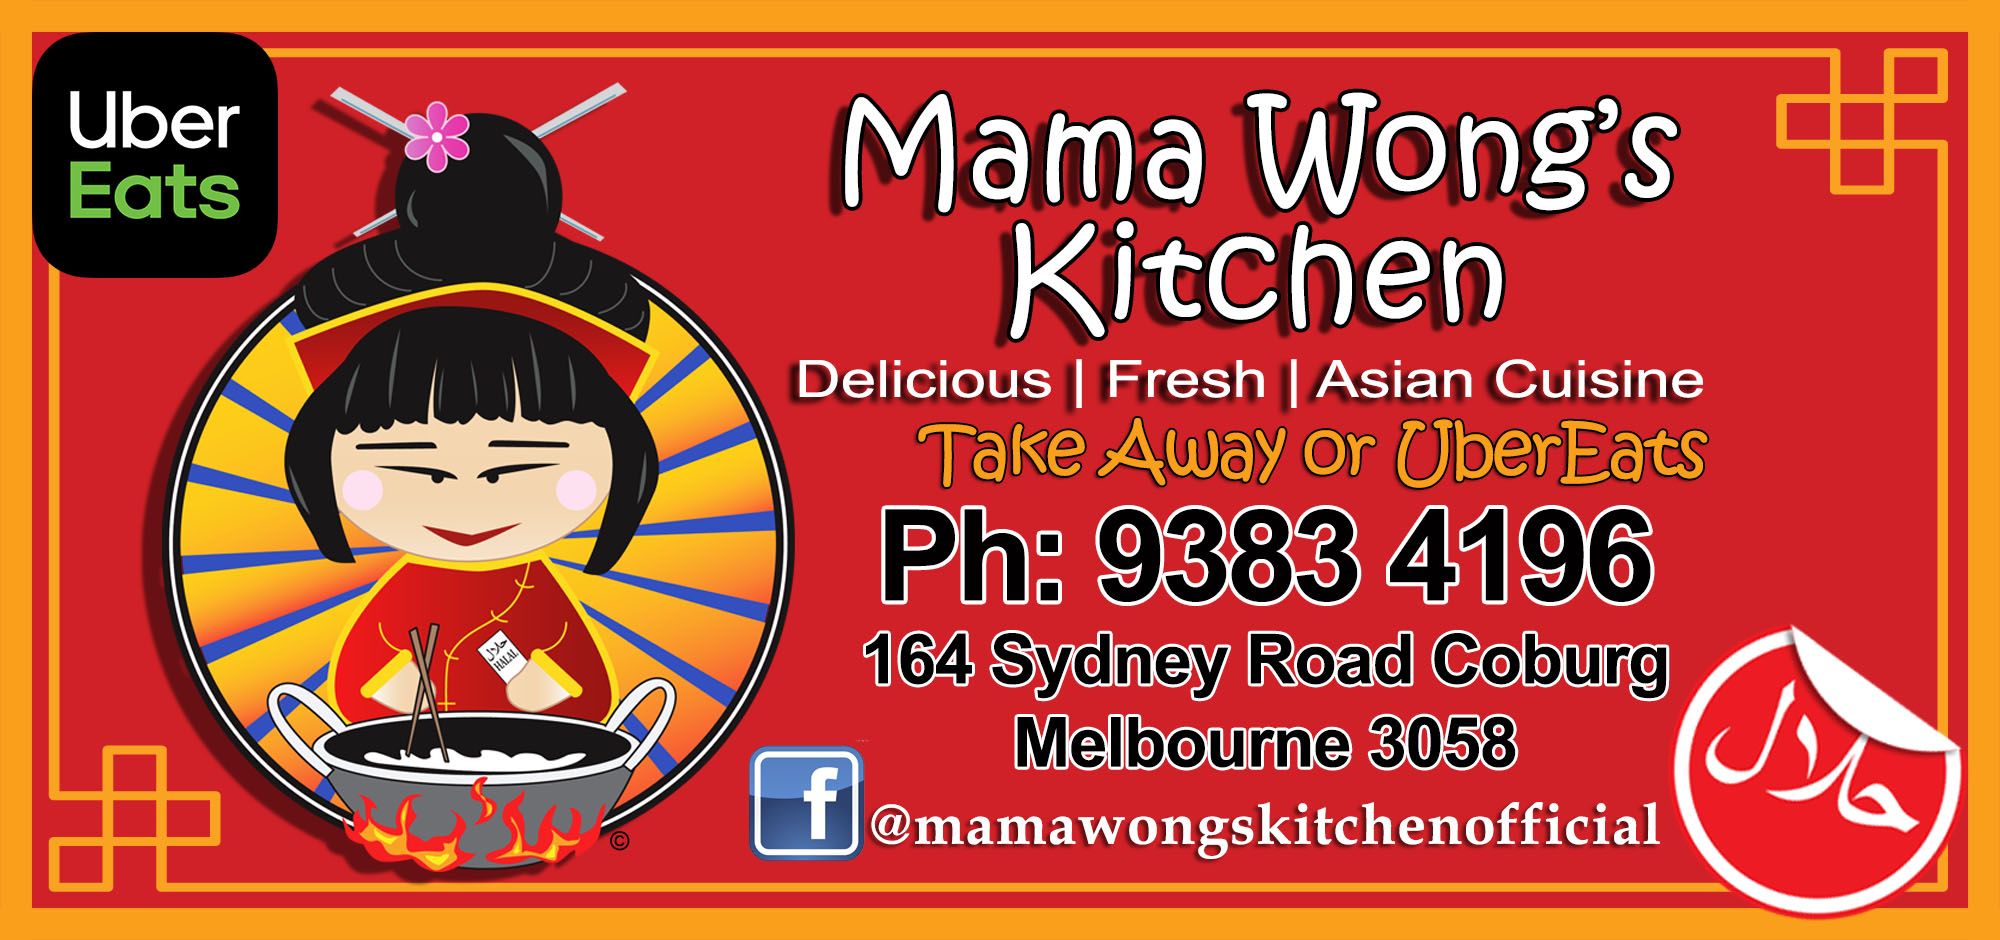 Mama Wong's Kitchen - Best Halal Chinese Dine In - Takeway Restaurant - 164 Sydney Road Coburg 3058. Ph: 93834196